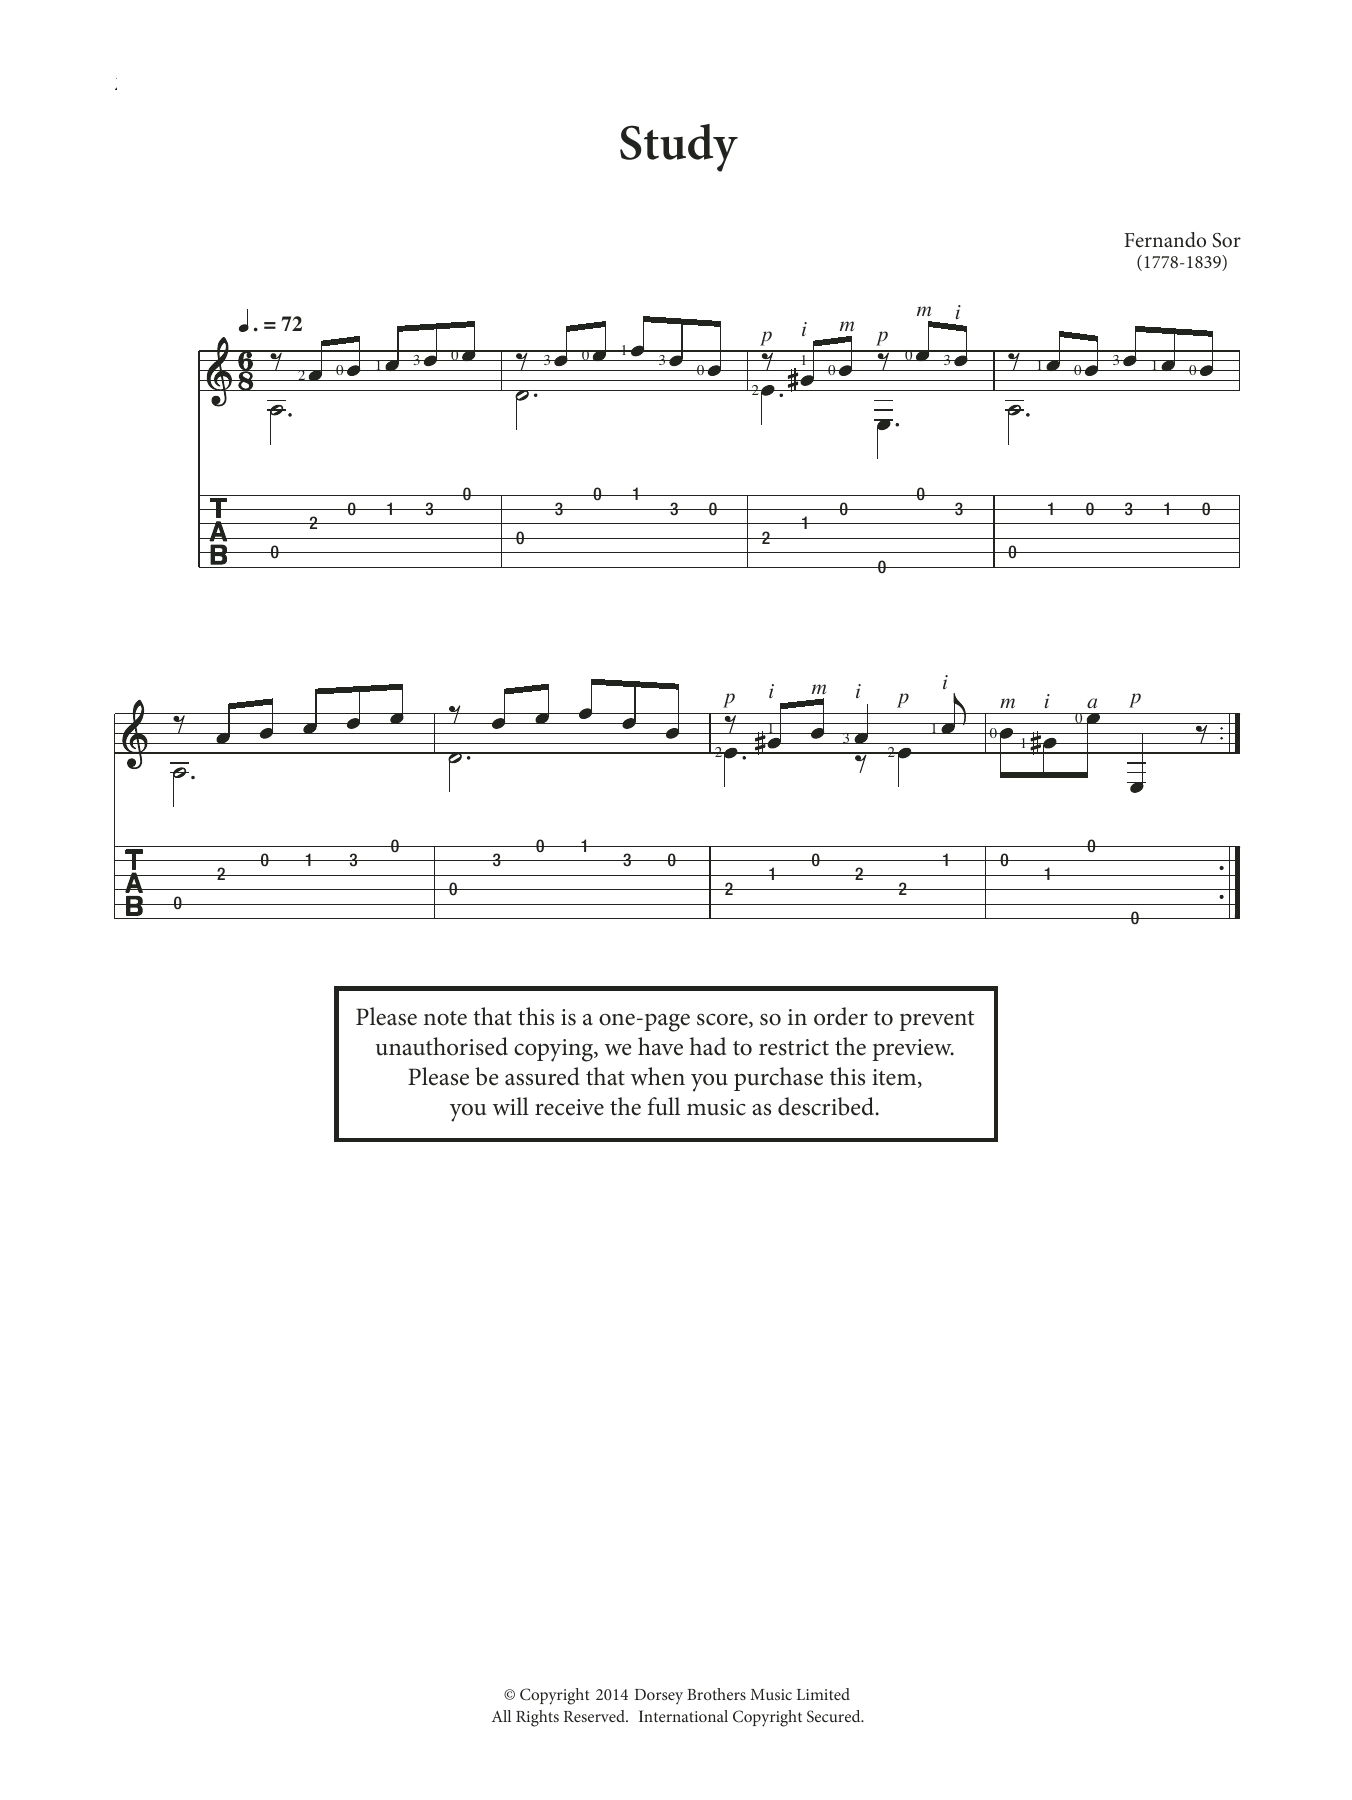 Fernando Sor Study Sheet Music Notes & Chords for Guitar - Download or Print PDF